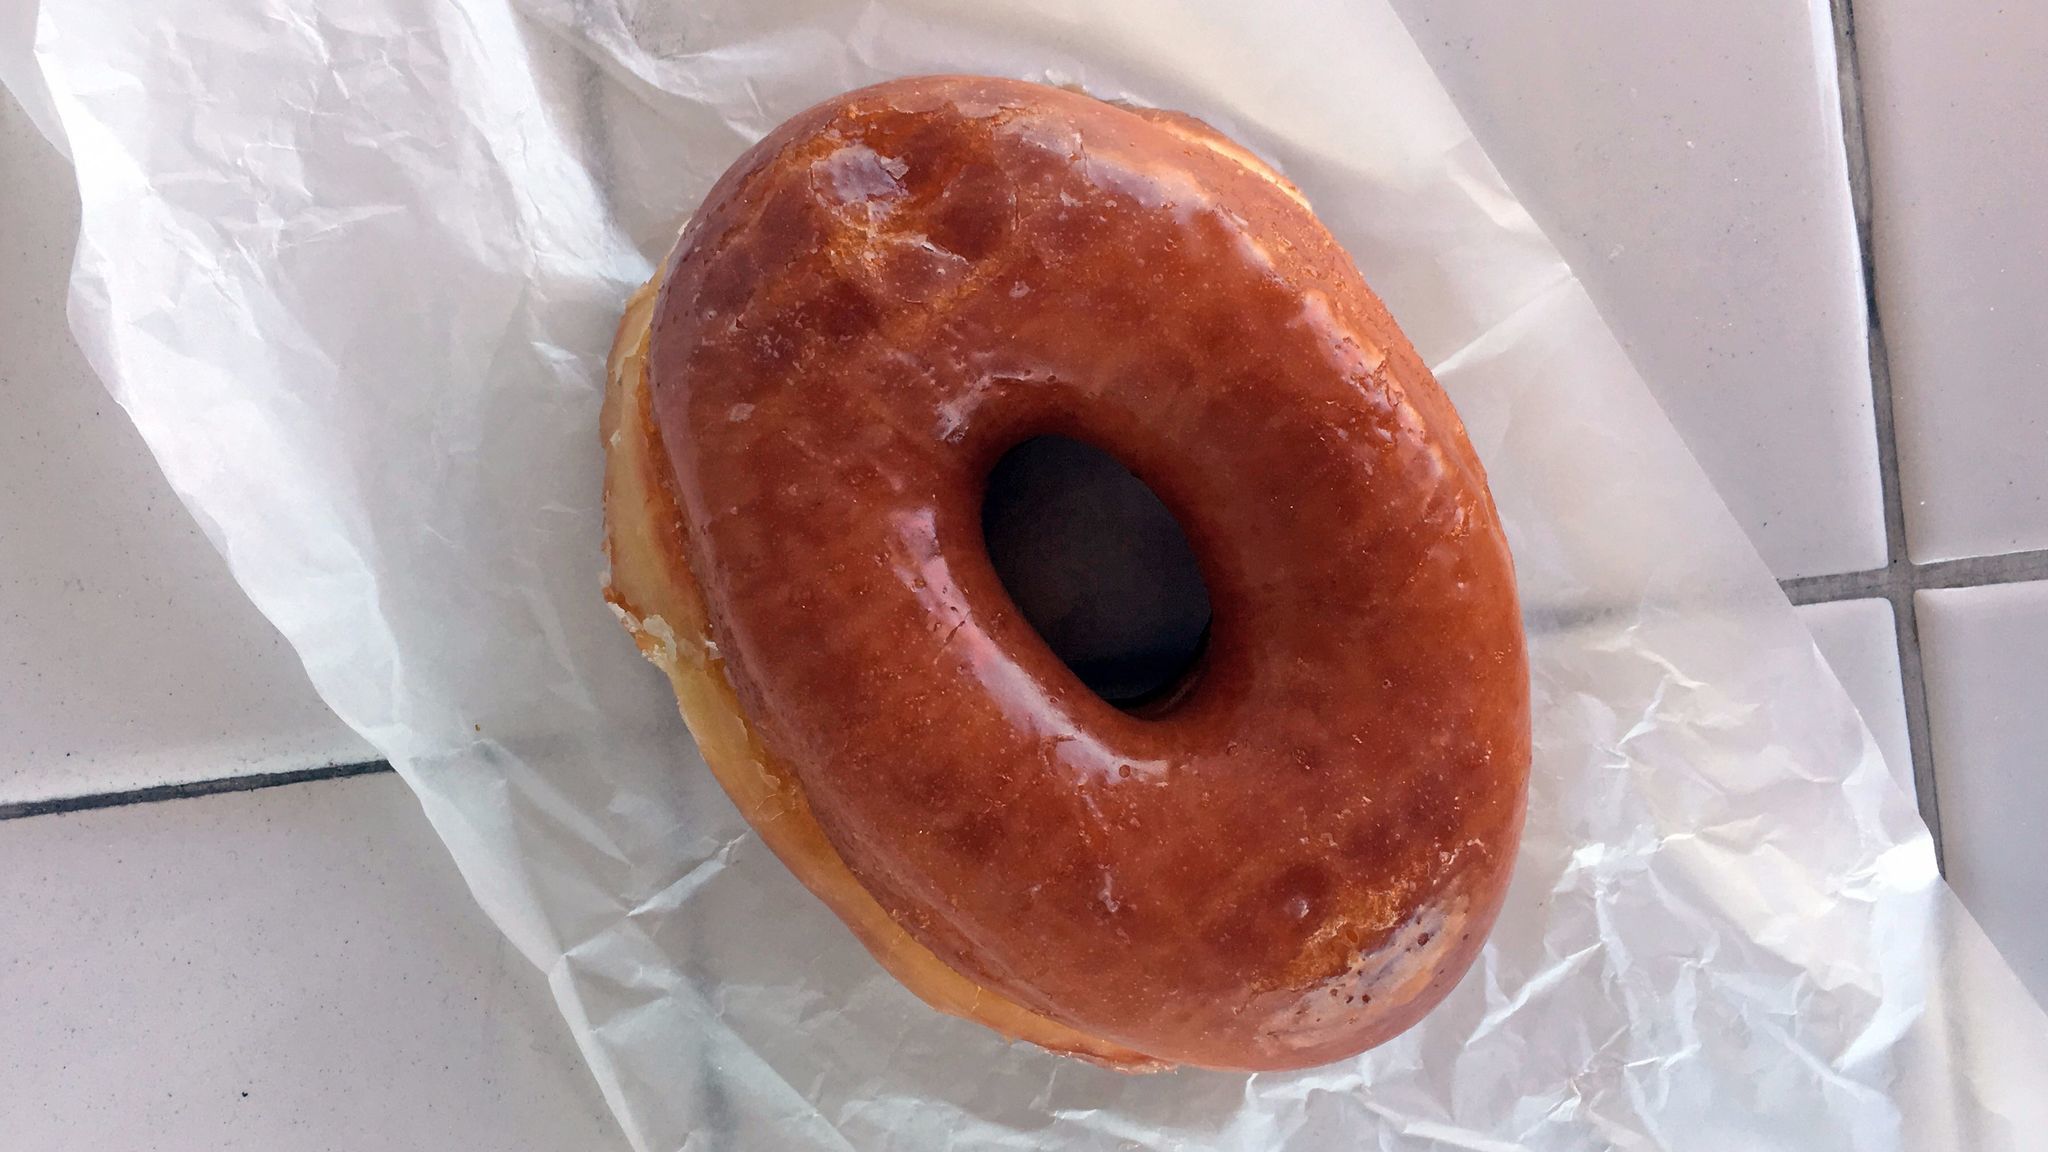 Glazed doughnut from Randy's Donuts.